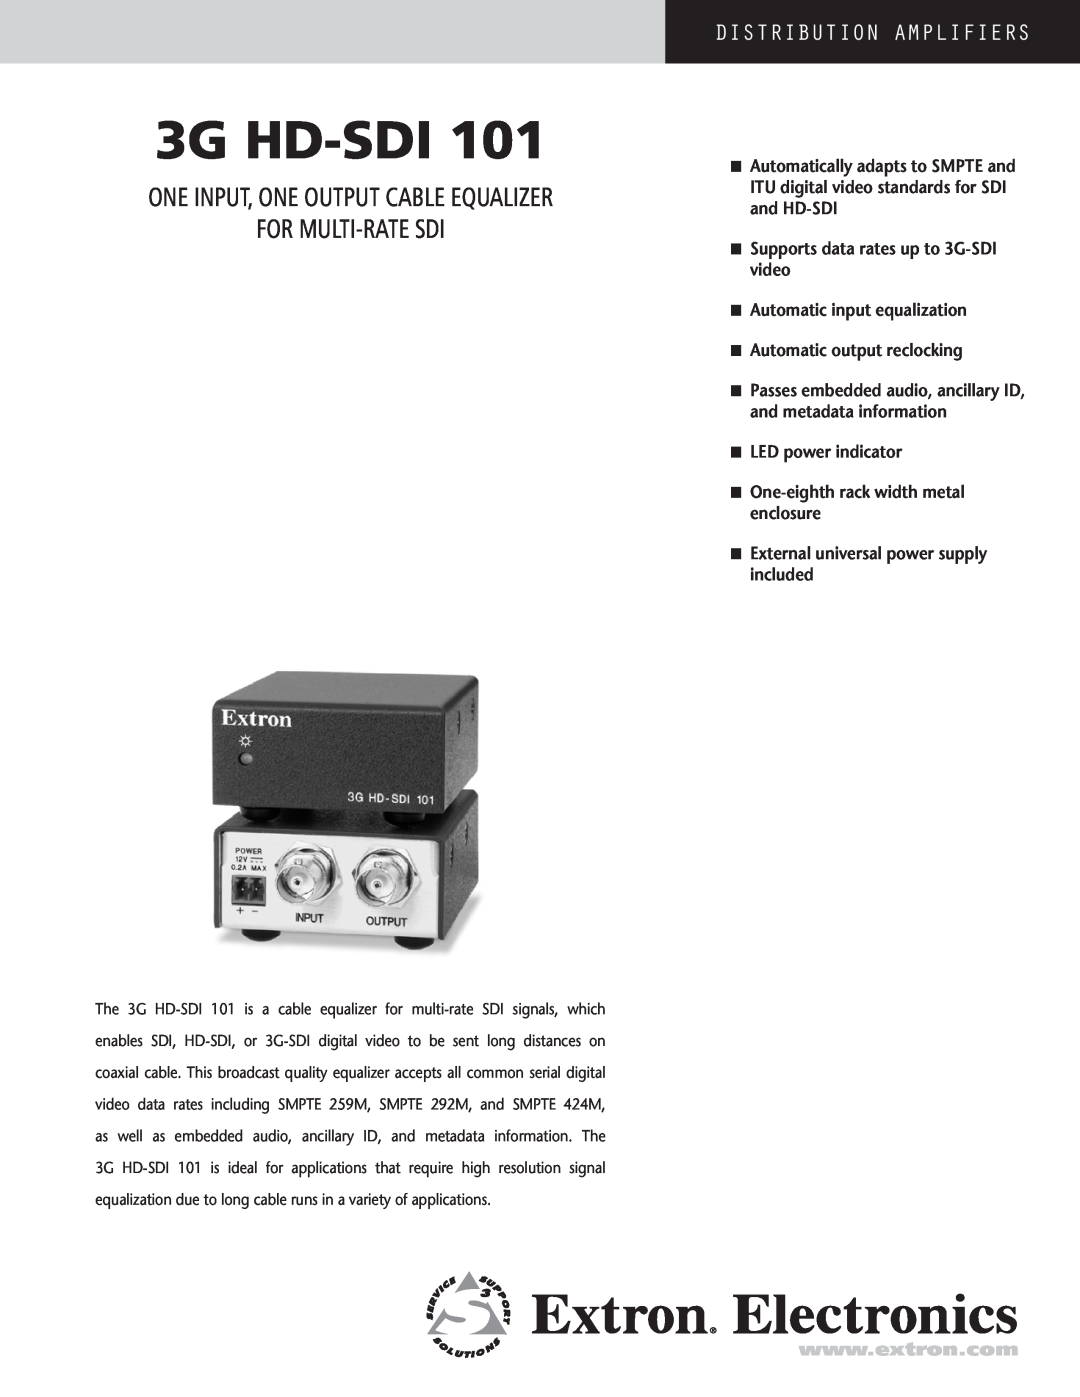 Extron electronic 3G HD-SDI 101 setup guide Step, Extron, HD-SDI101 Cable Equalizer, 68-1553-50, Rev. A, HD-SDICamera 